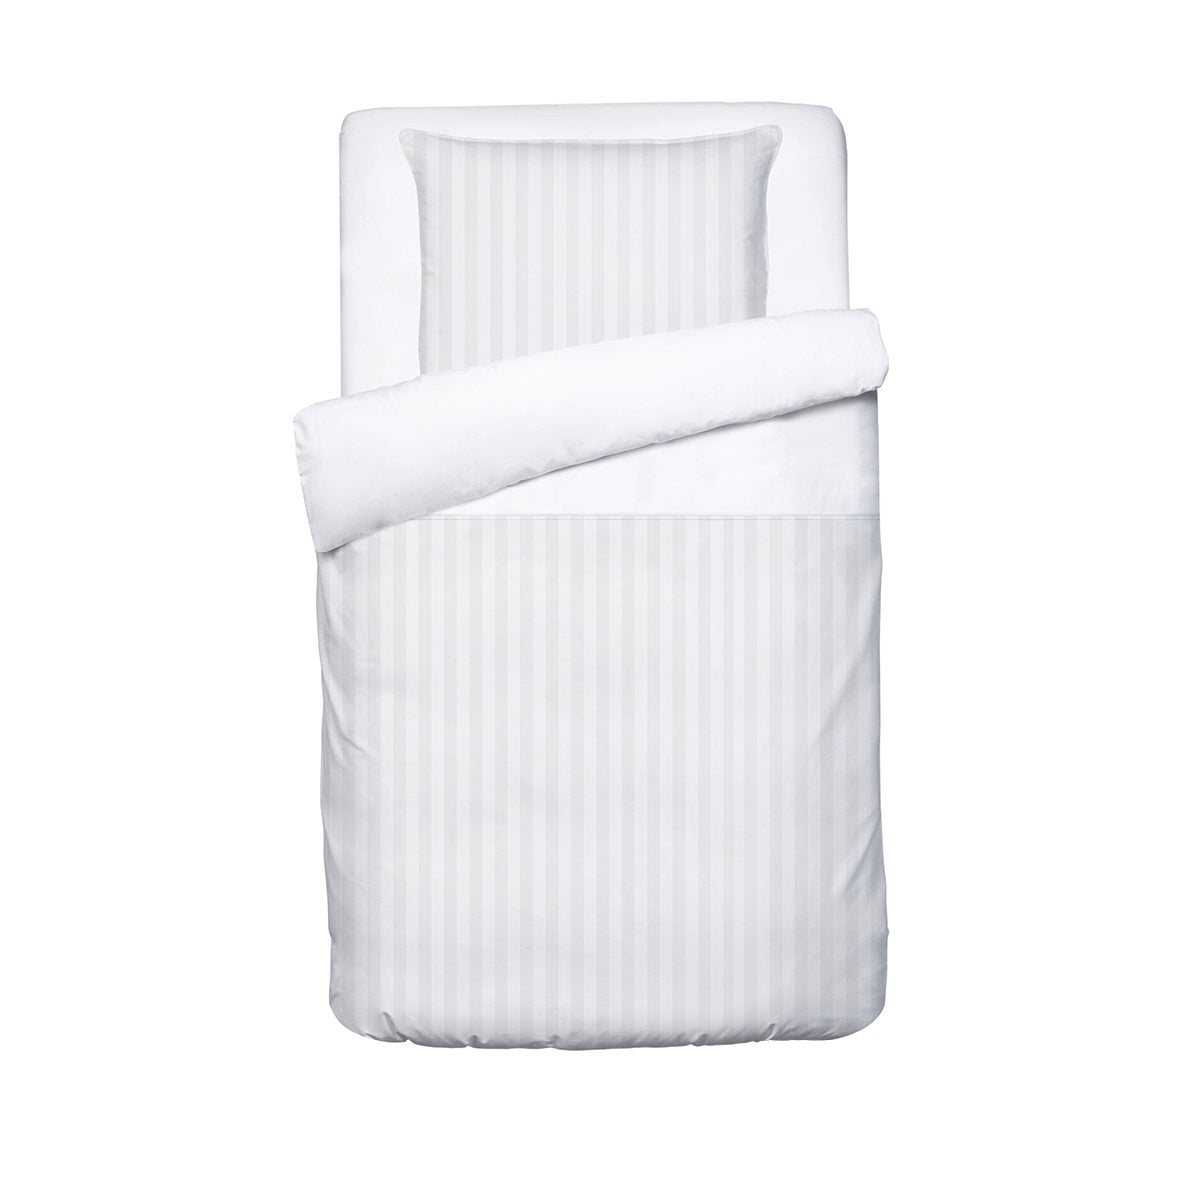 Duvet cover + pillowcase baby cotton satin - Jacquard woven - dobby stripe white